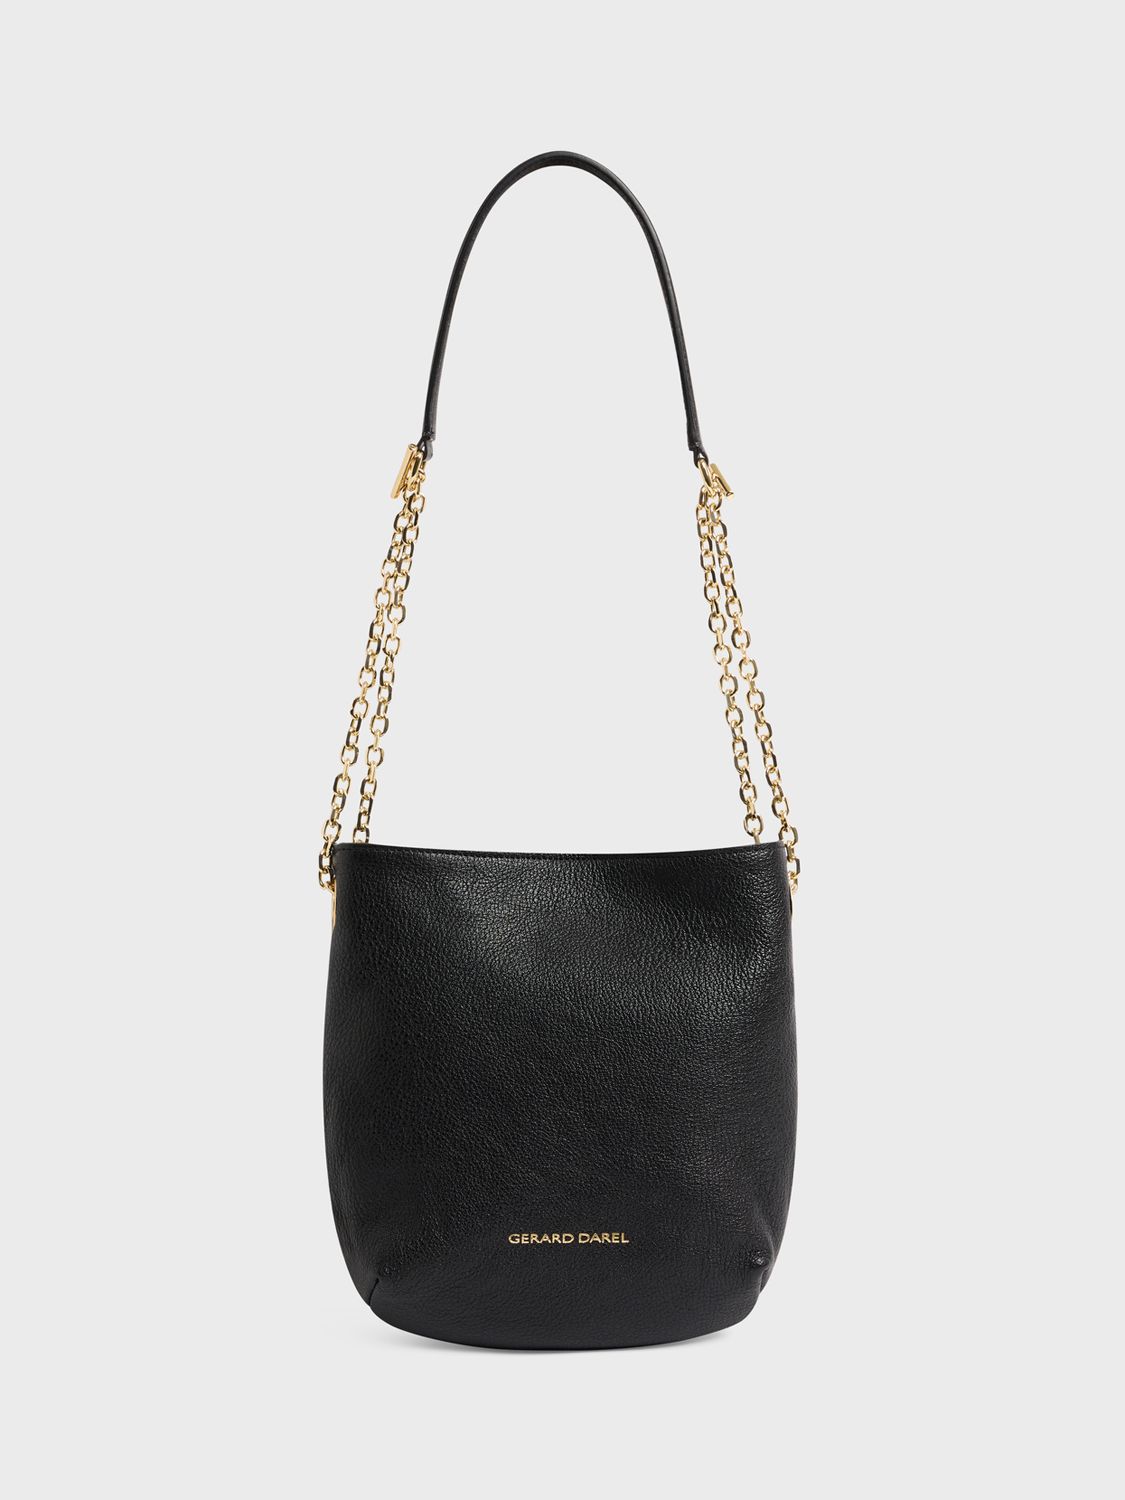 Gerard Darel Mini Charlotte Leather Handbag, Black at John Lewis & Partners